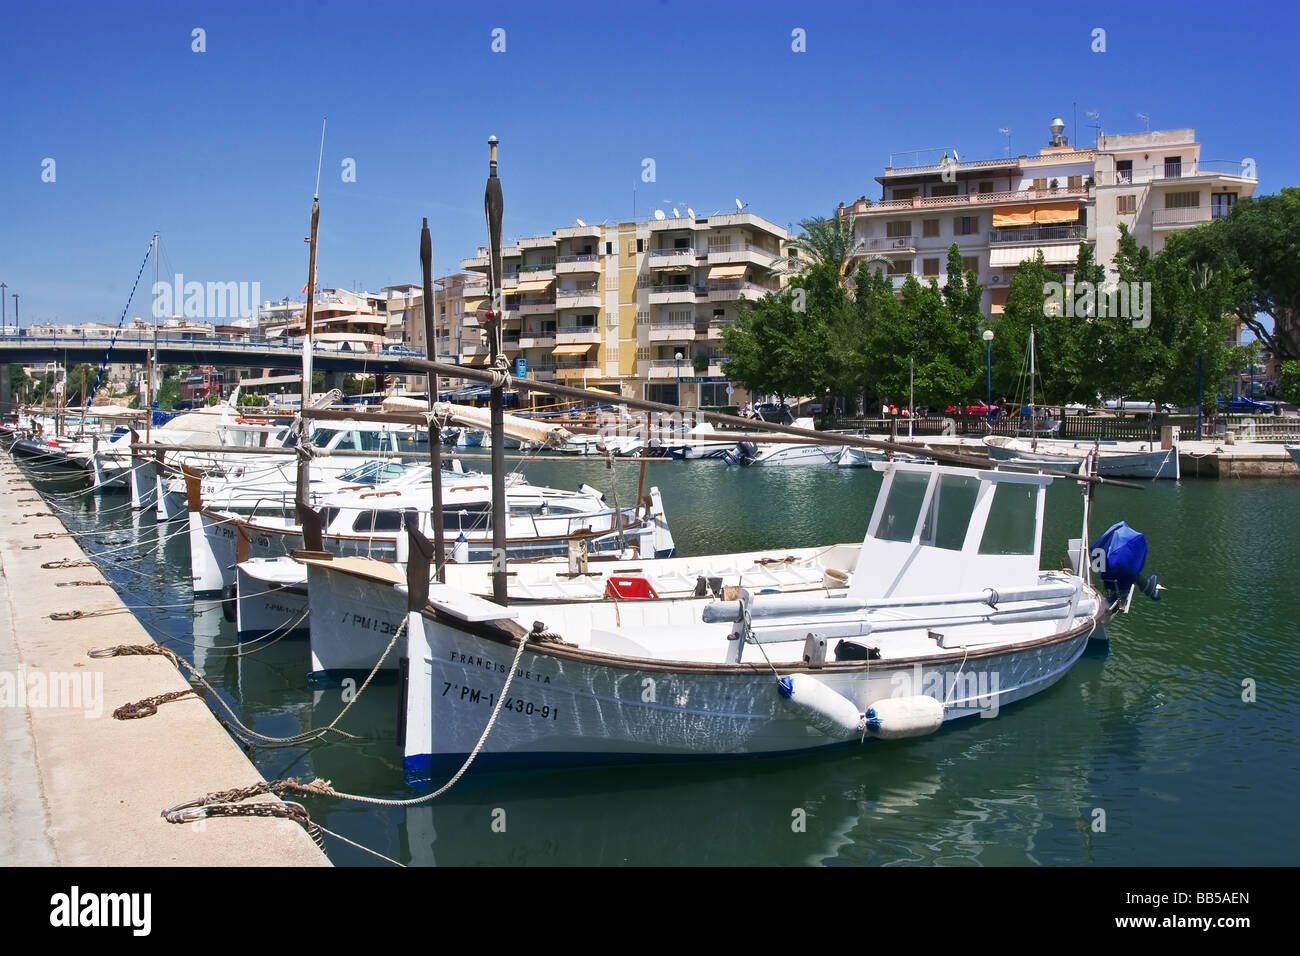 Porto Cristo, Mallorca Stock Photo - Alamy